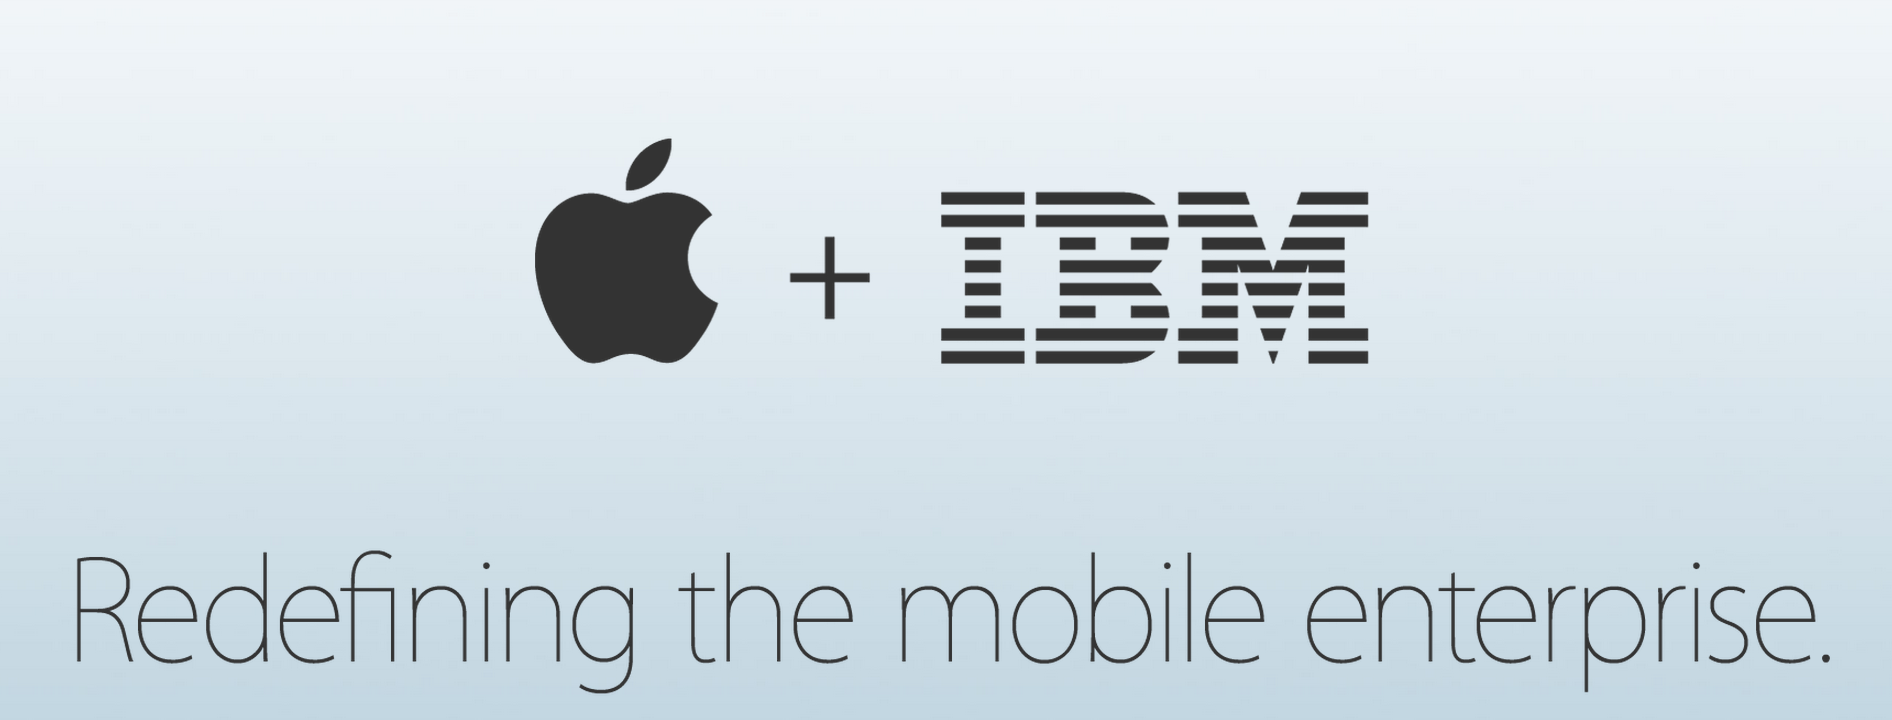 Apple-IBM-enterprise